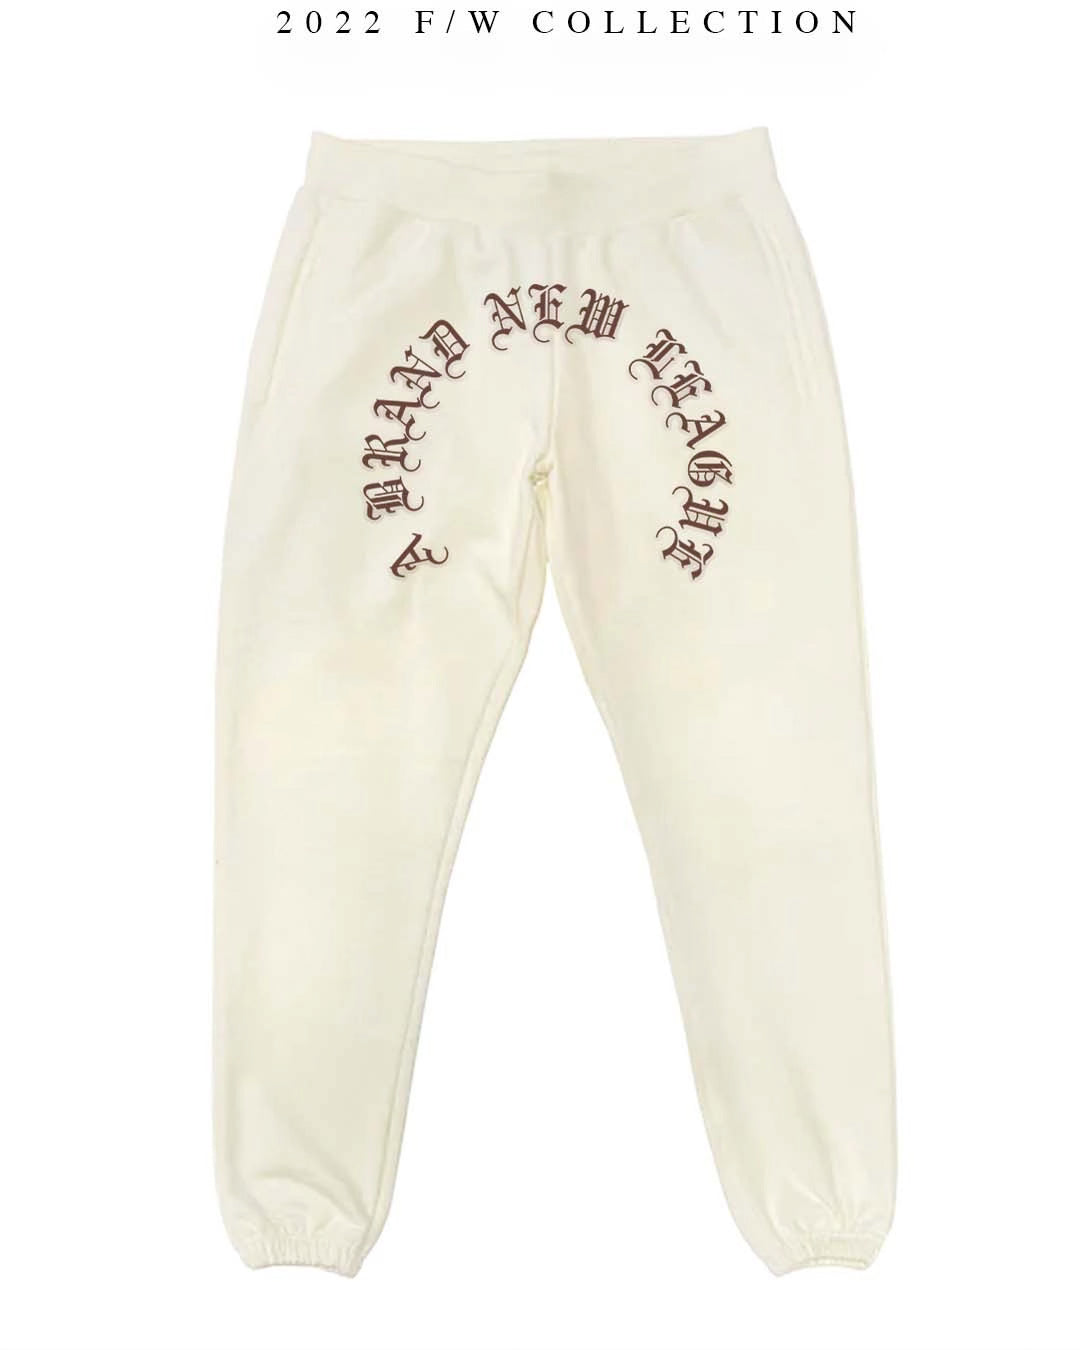 BNL Old English Sweatpants in Cream